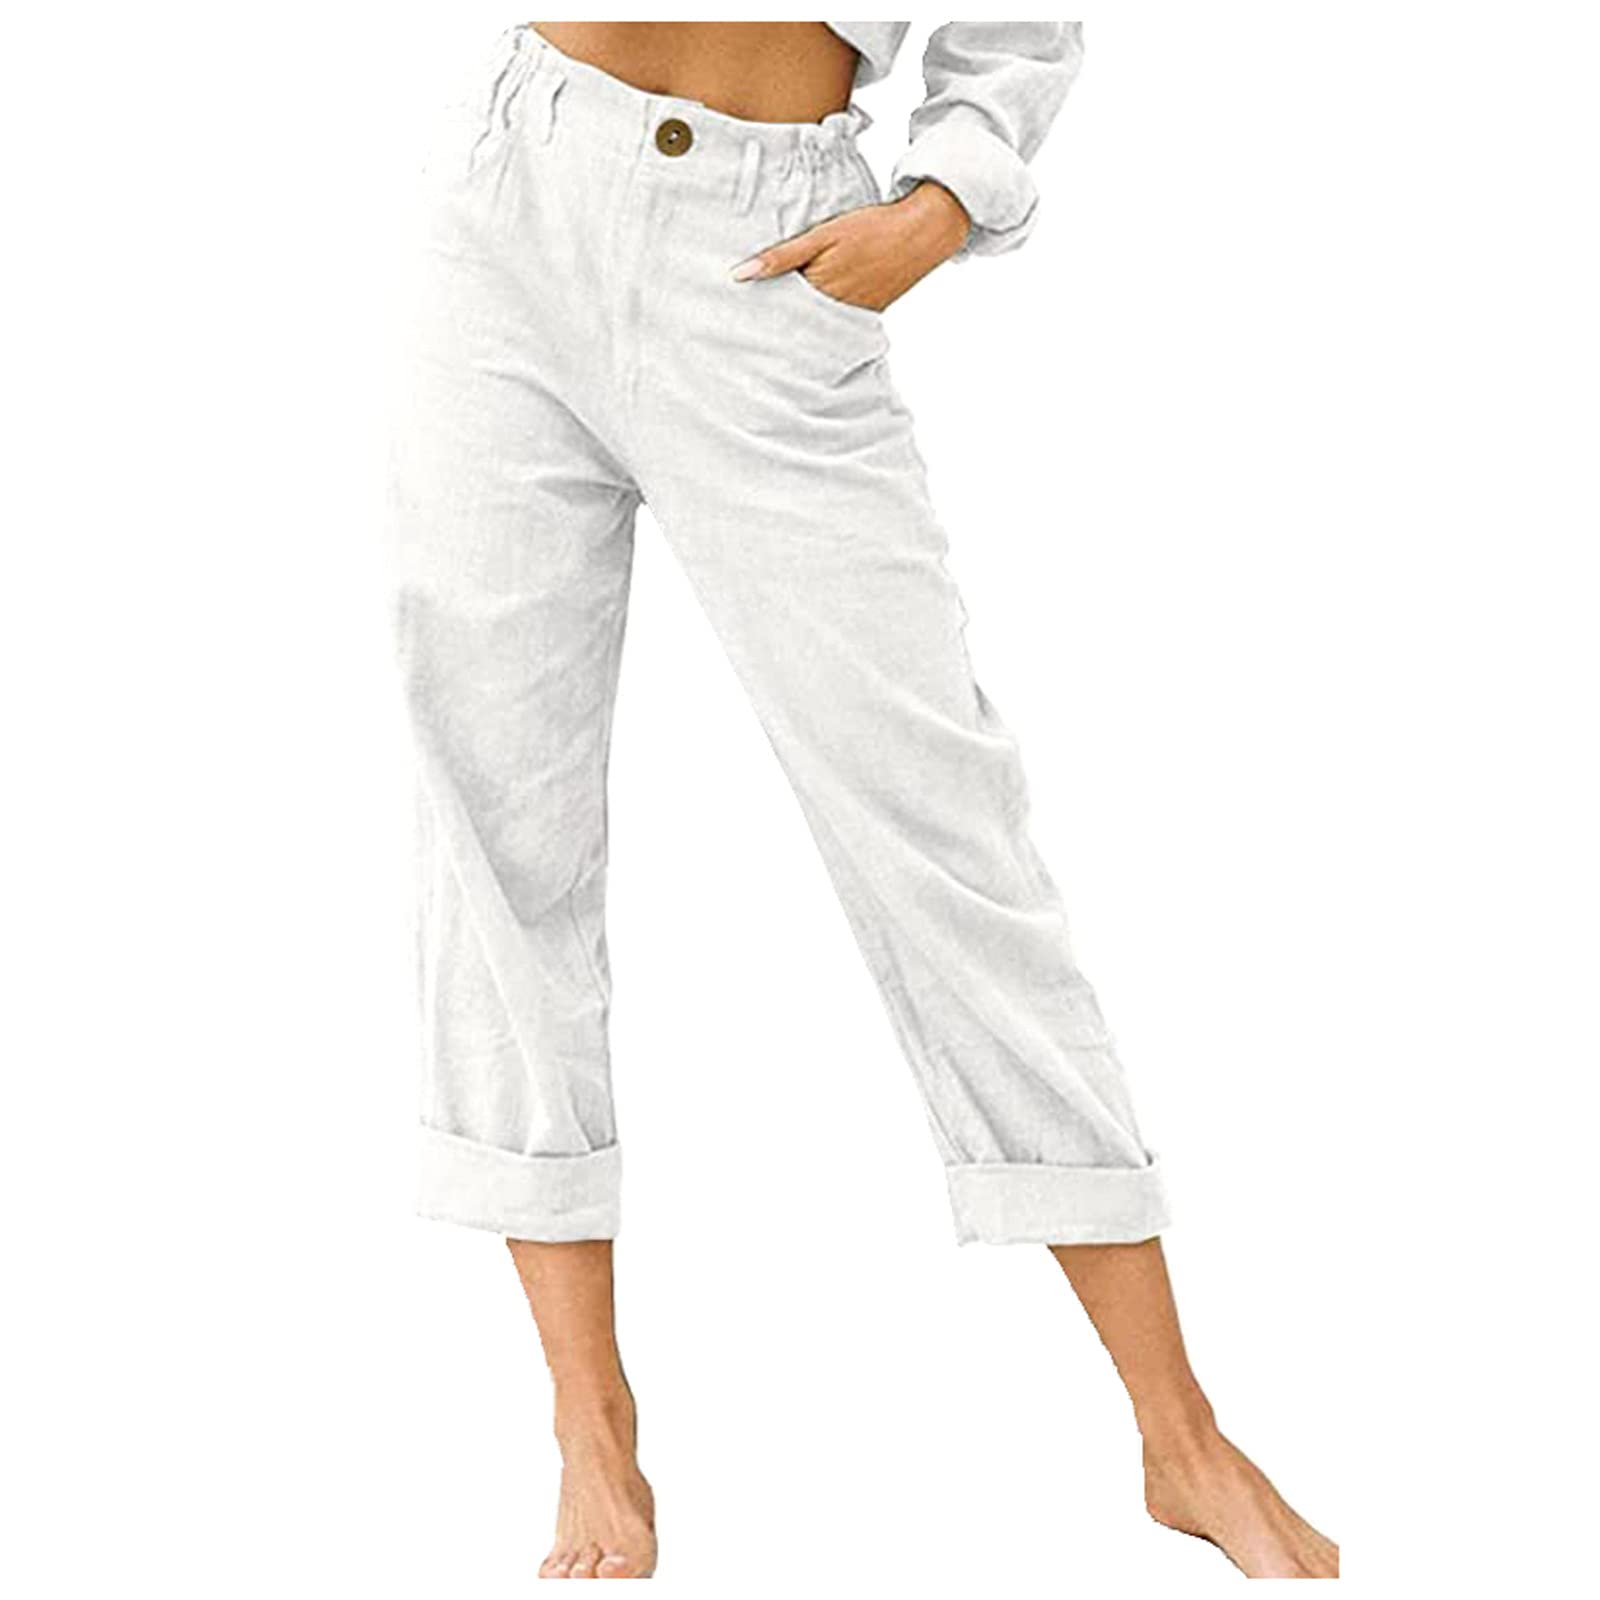 beshionljs Womens Cotton Linen Pants Elastic High Waist Capri Pants Summer  Stretch Lightweight Loose Comfy Golf Crop Pants White-05 XX-Large